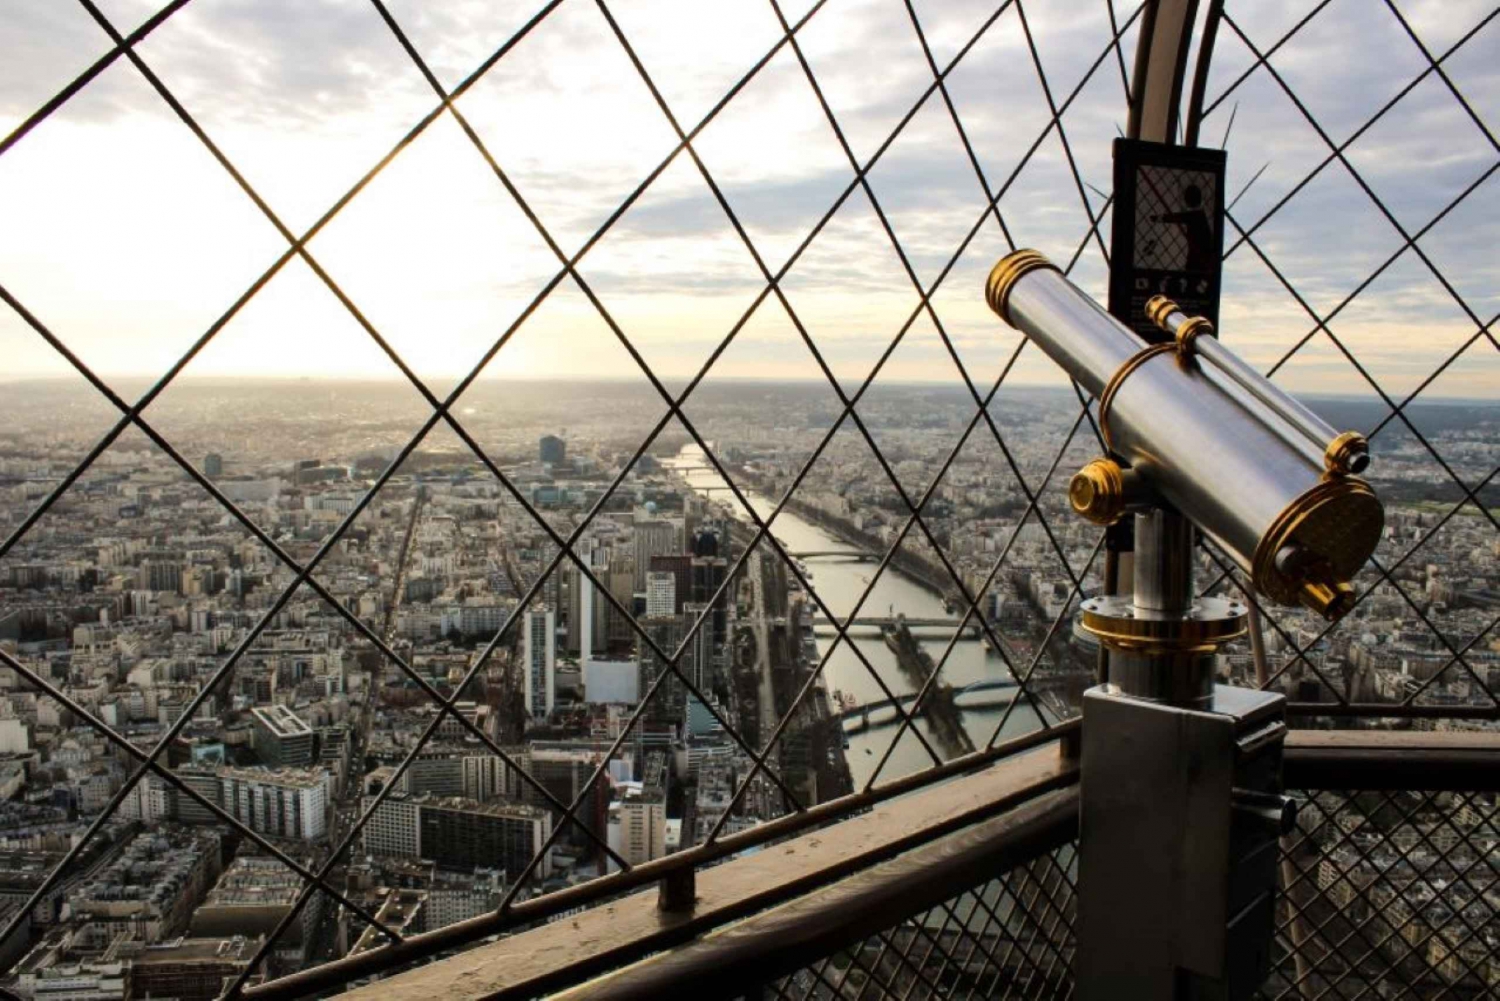 Paris: Eiffel Tower Summit Access & Cruise by Night